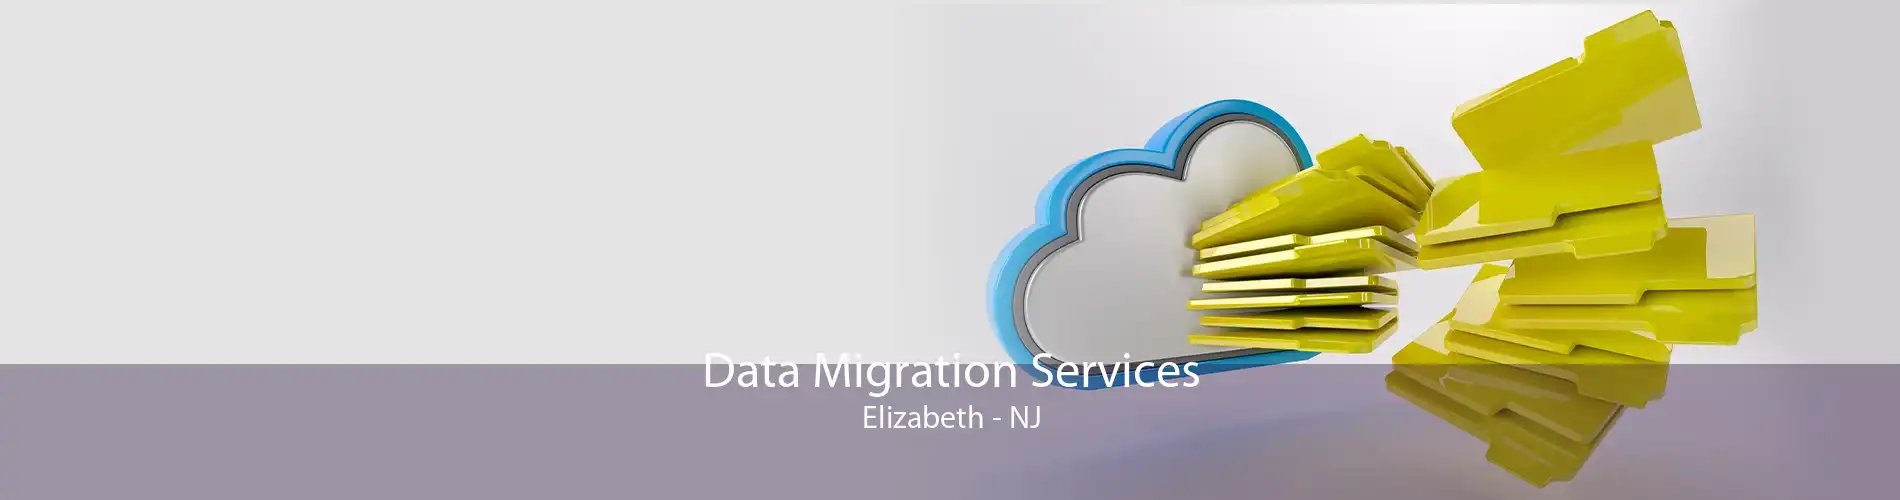 Data Migration Services Elizabeth - NJ